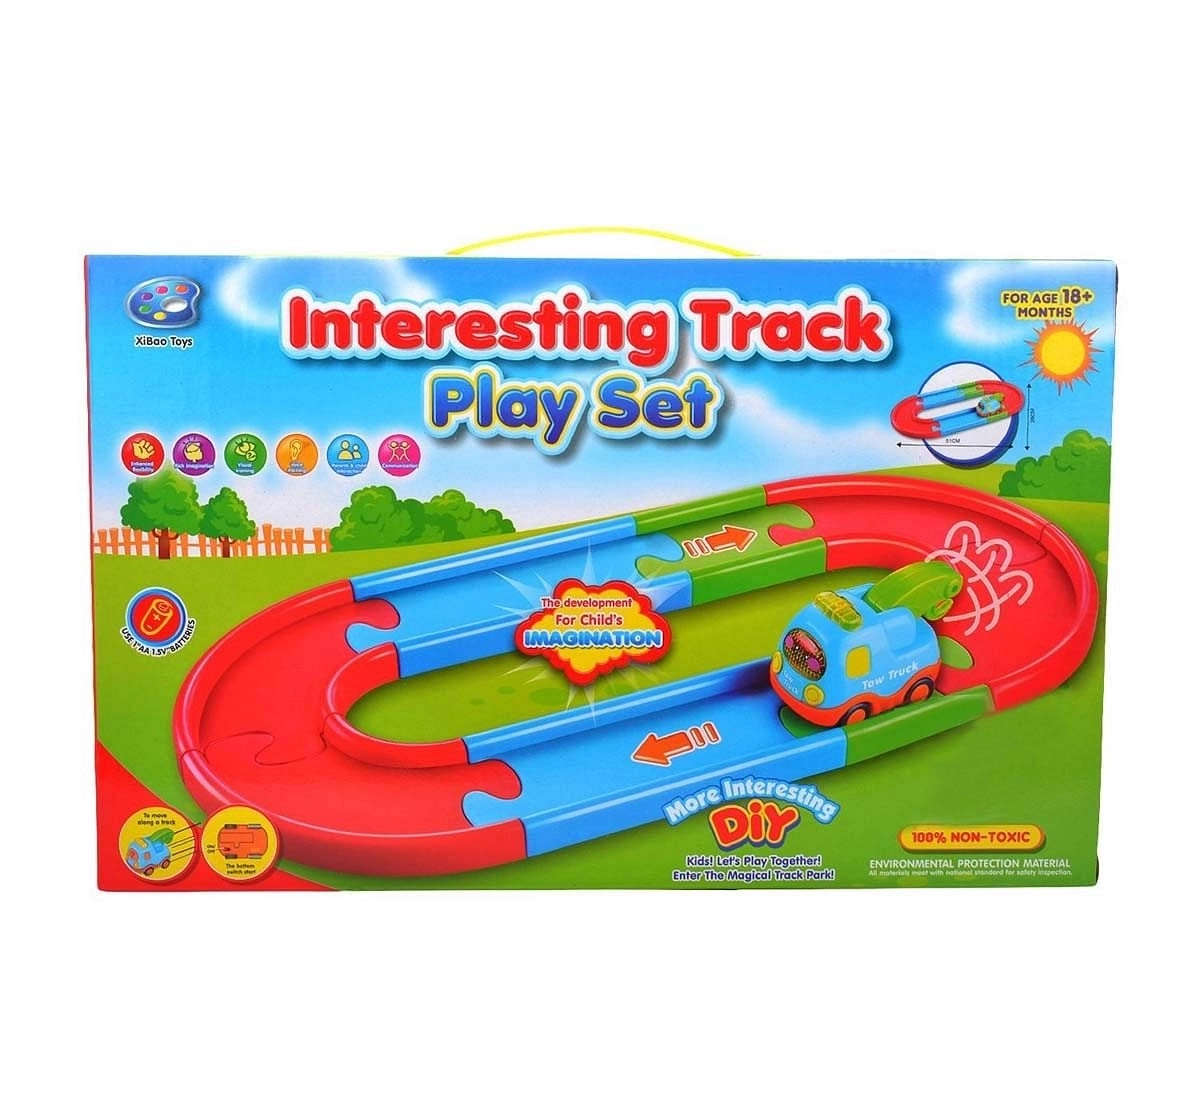 Comdaq Preschool Rail Track Set Activity Toys for Kids age 3Y+ 